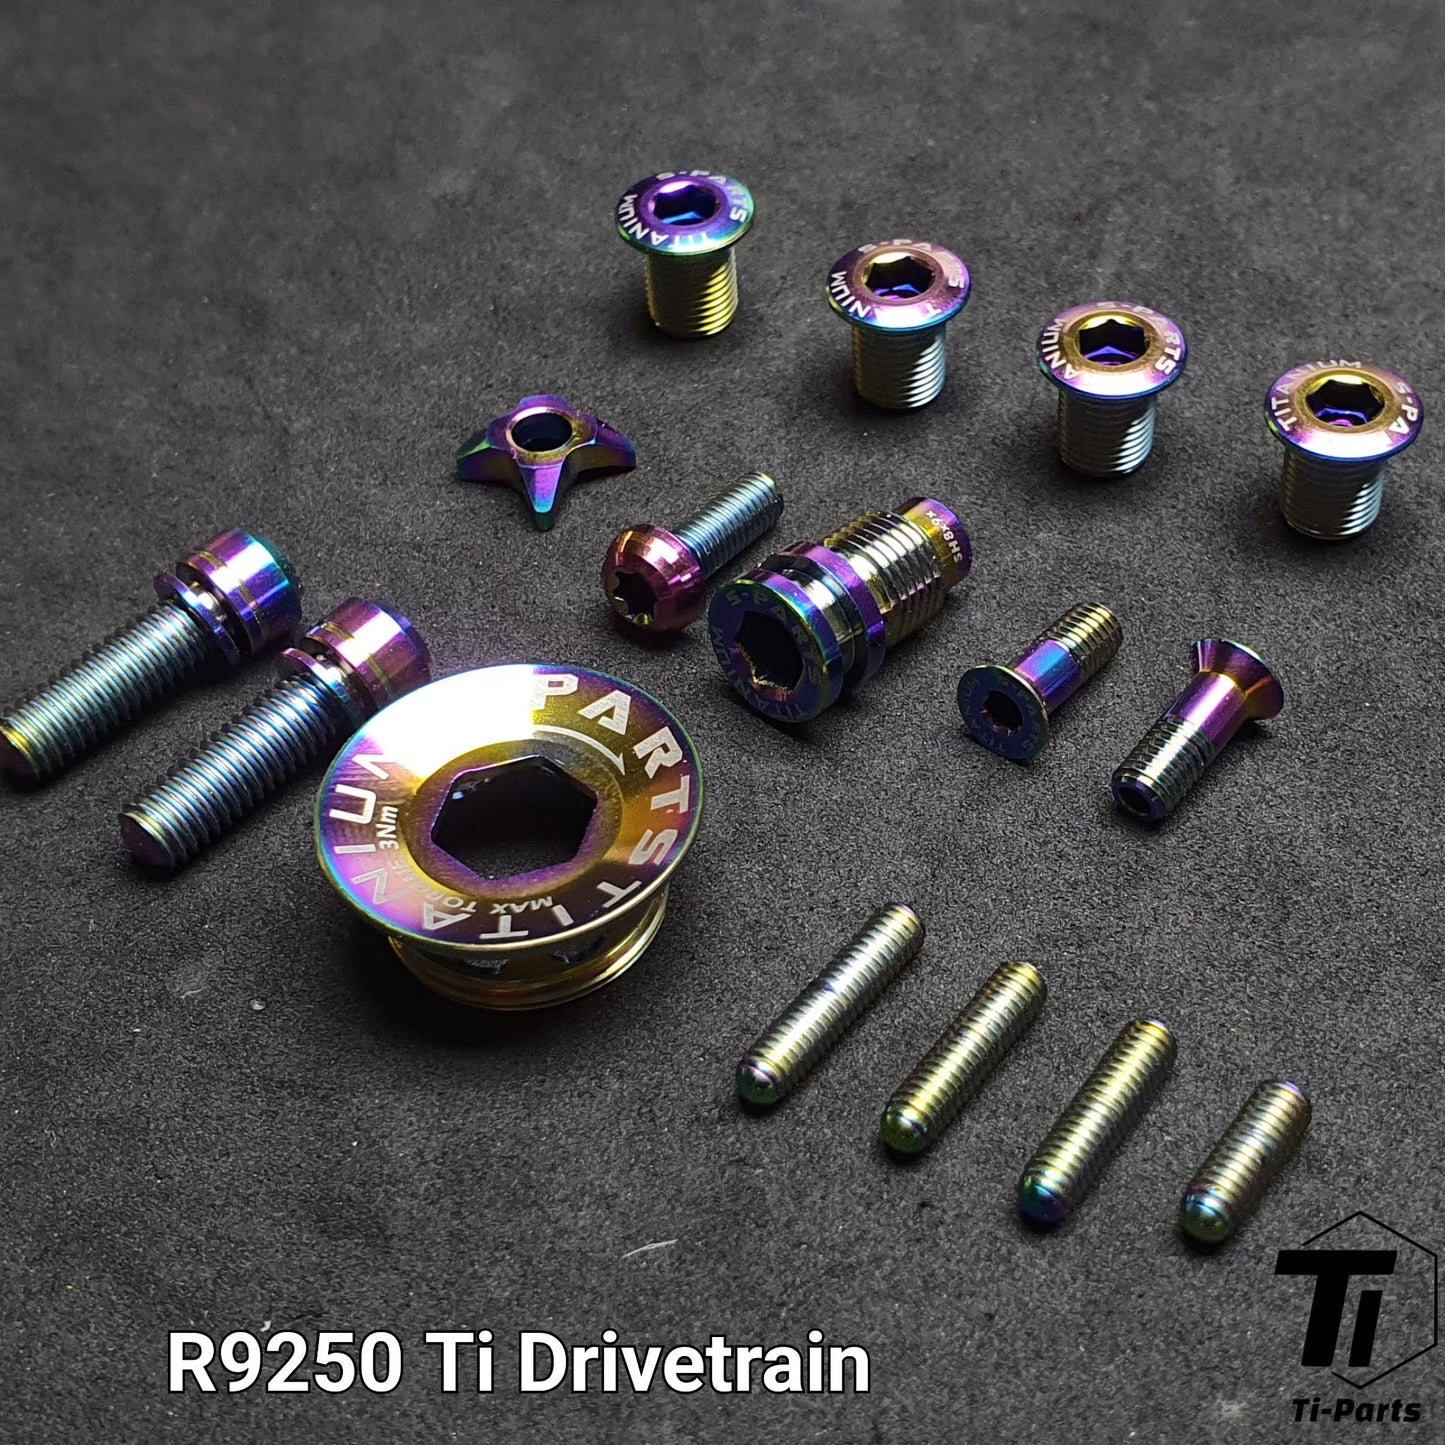 Titanium-upgradekit voor R9270 R8170 R7170 Shimano | Dura Ace Ultegra 105 12s R9200 R9250 R8150 Aandrijfrem | Titanium schroef